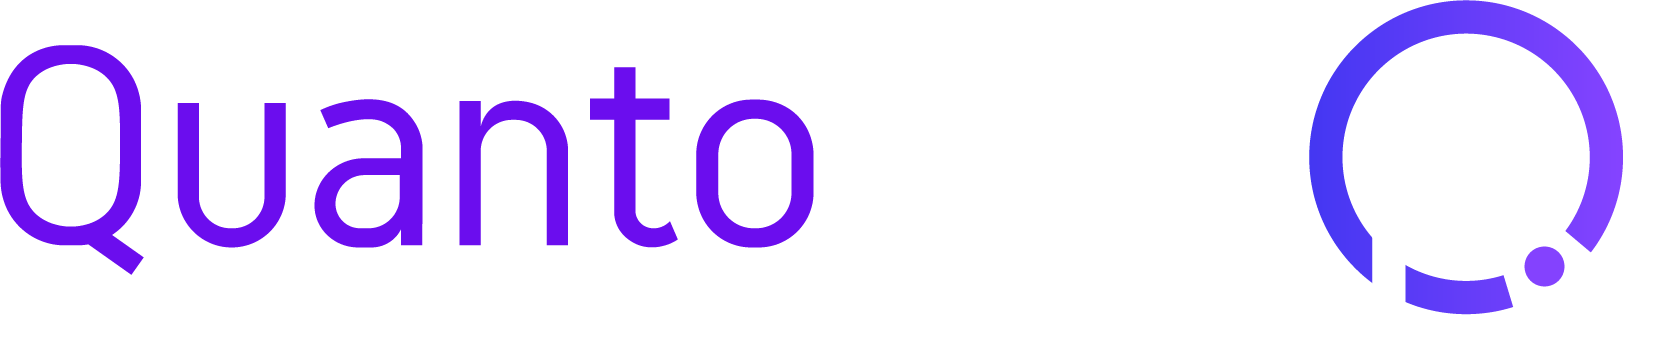 footer QuantoPay logo